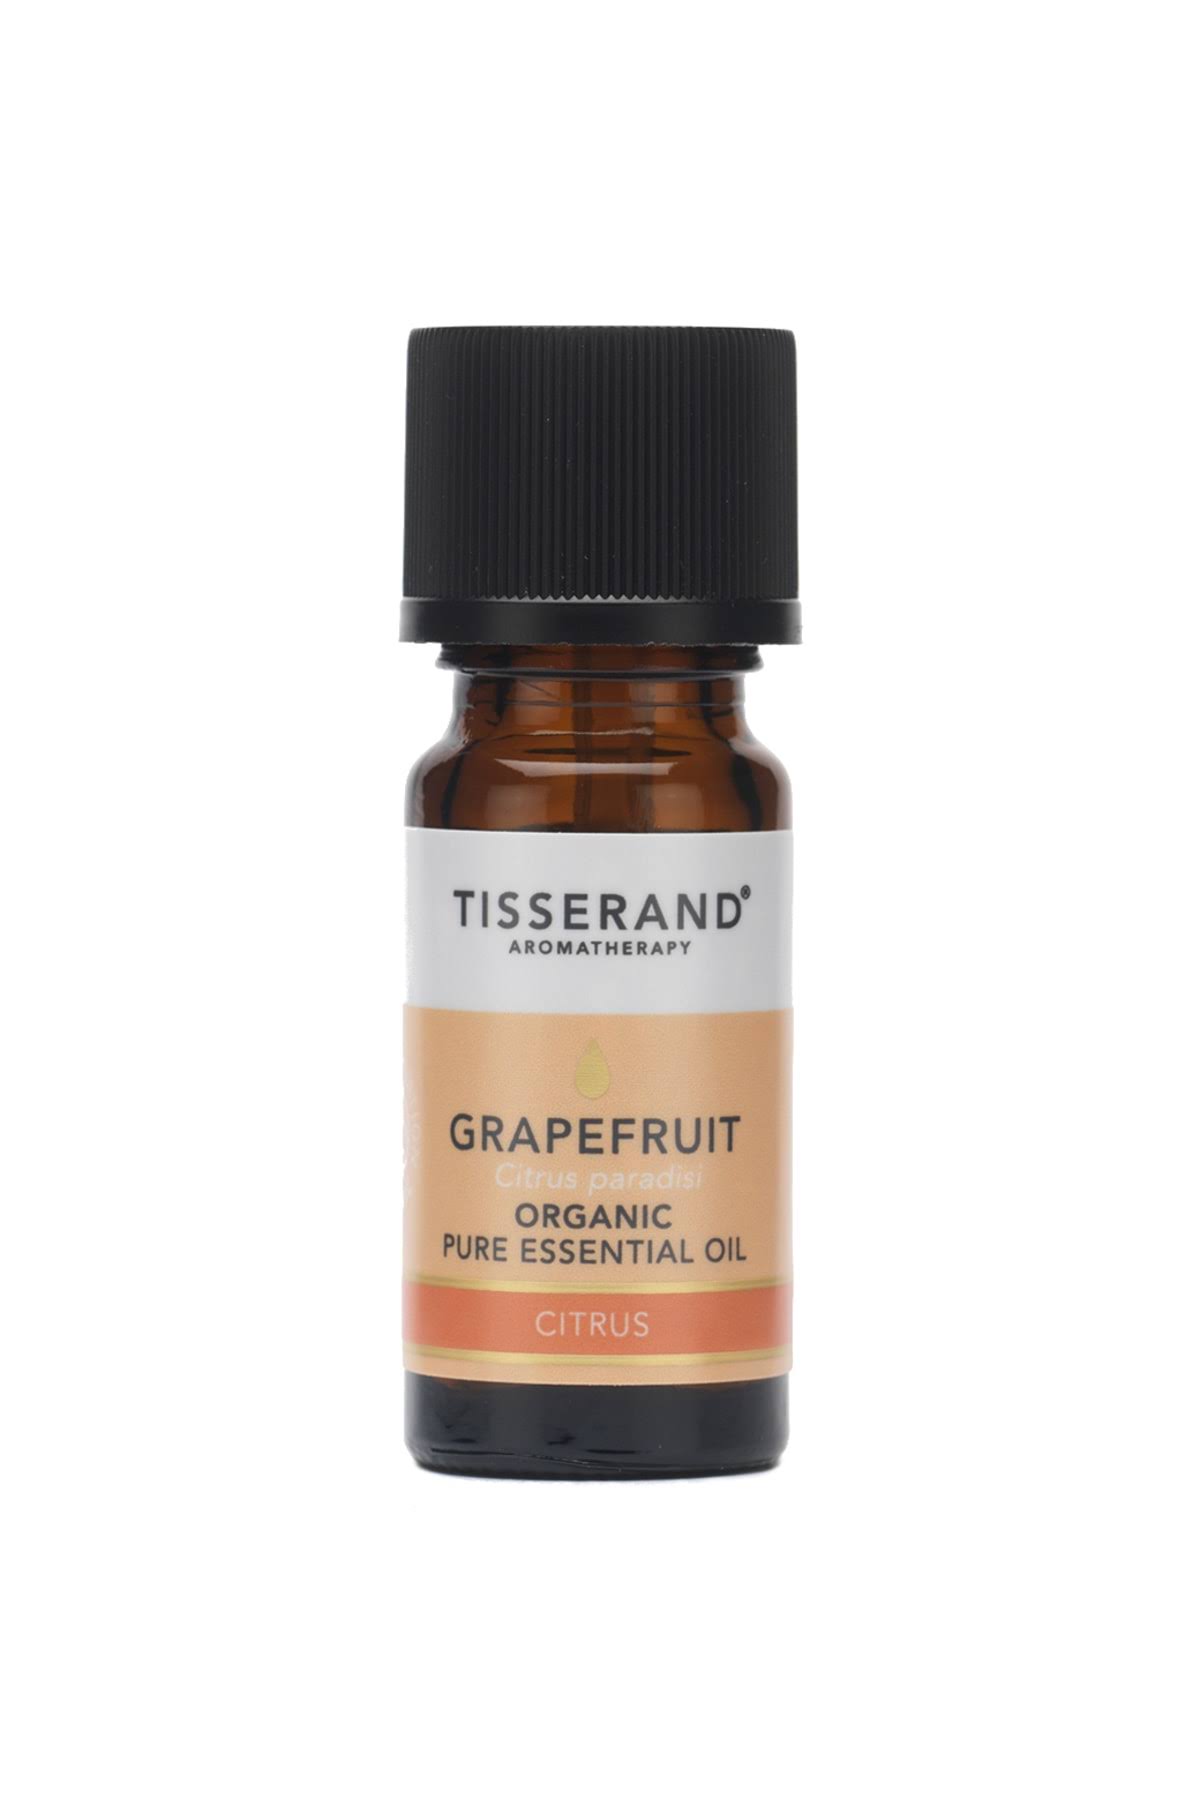 Tisserand Aromatherapy Organic Pure Essential Oil - Grapefruit, 9ml